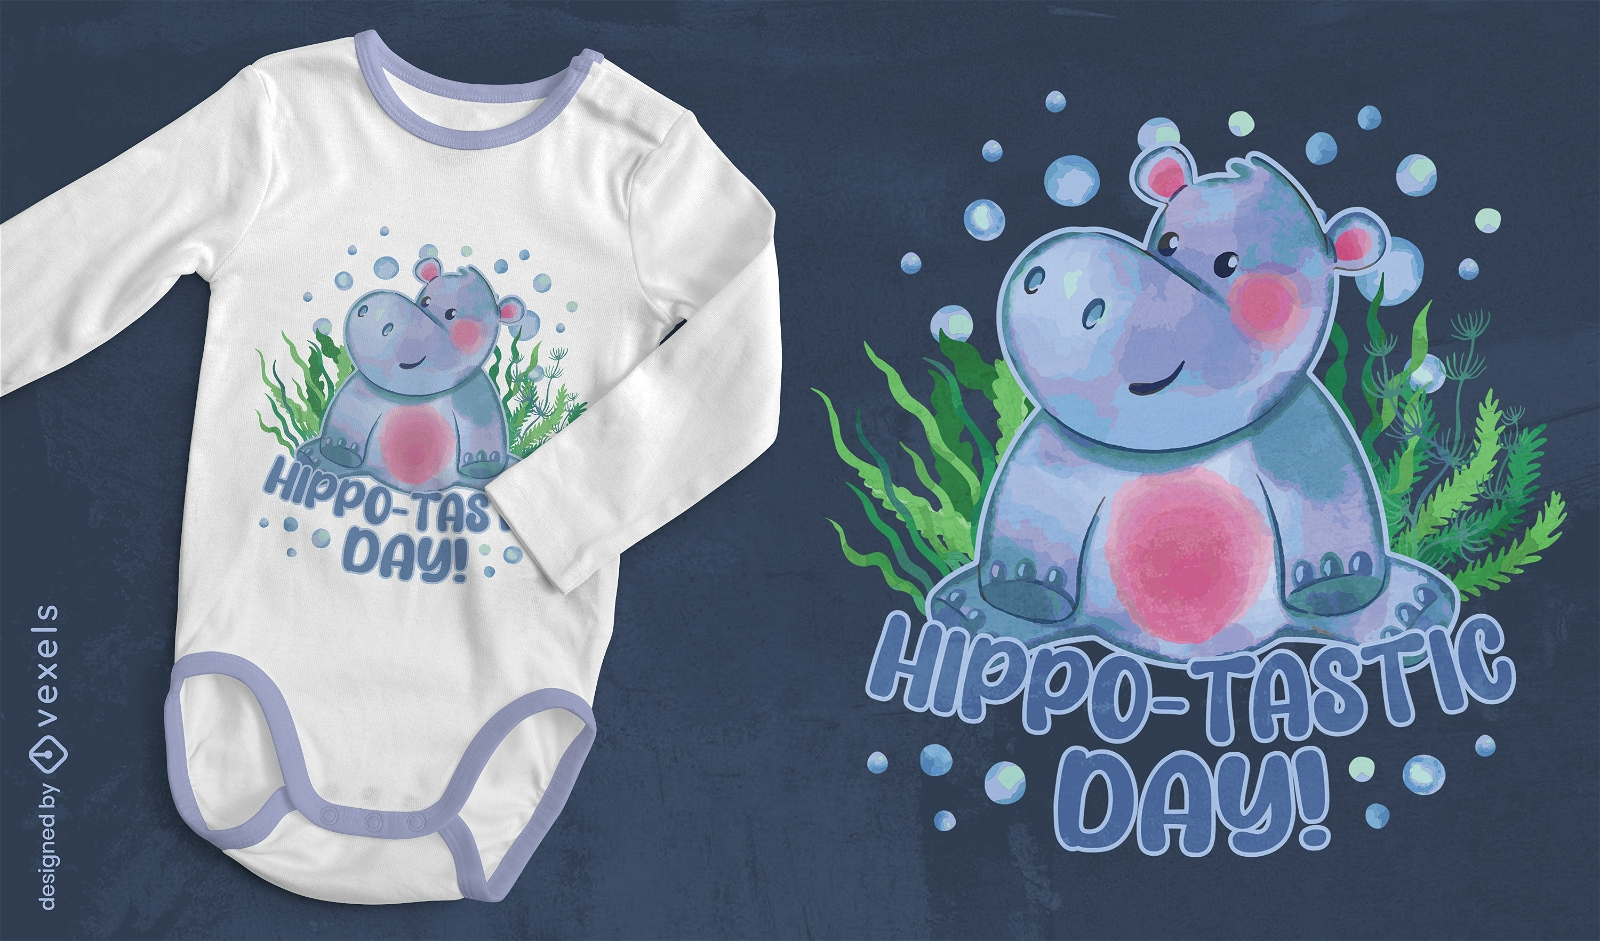 Cute hippo baby animal t-shirt design